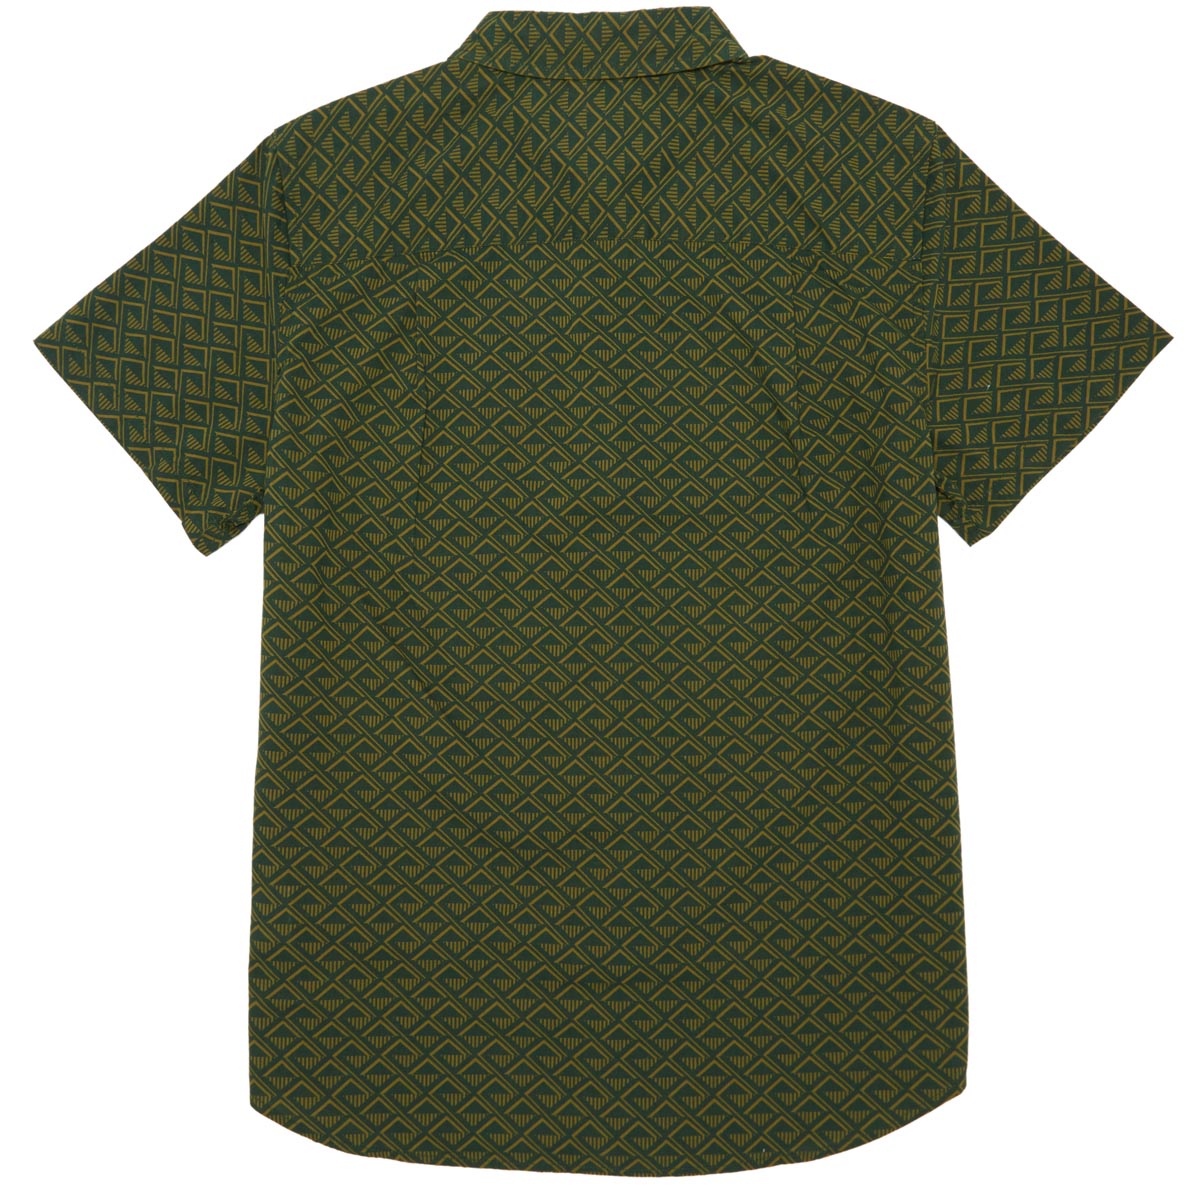 Brixton Charter Print Shirt - Trekking Green Tile image 2